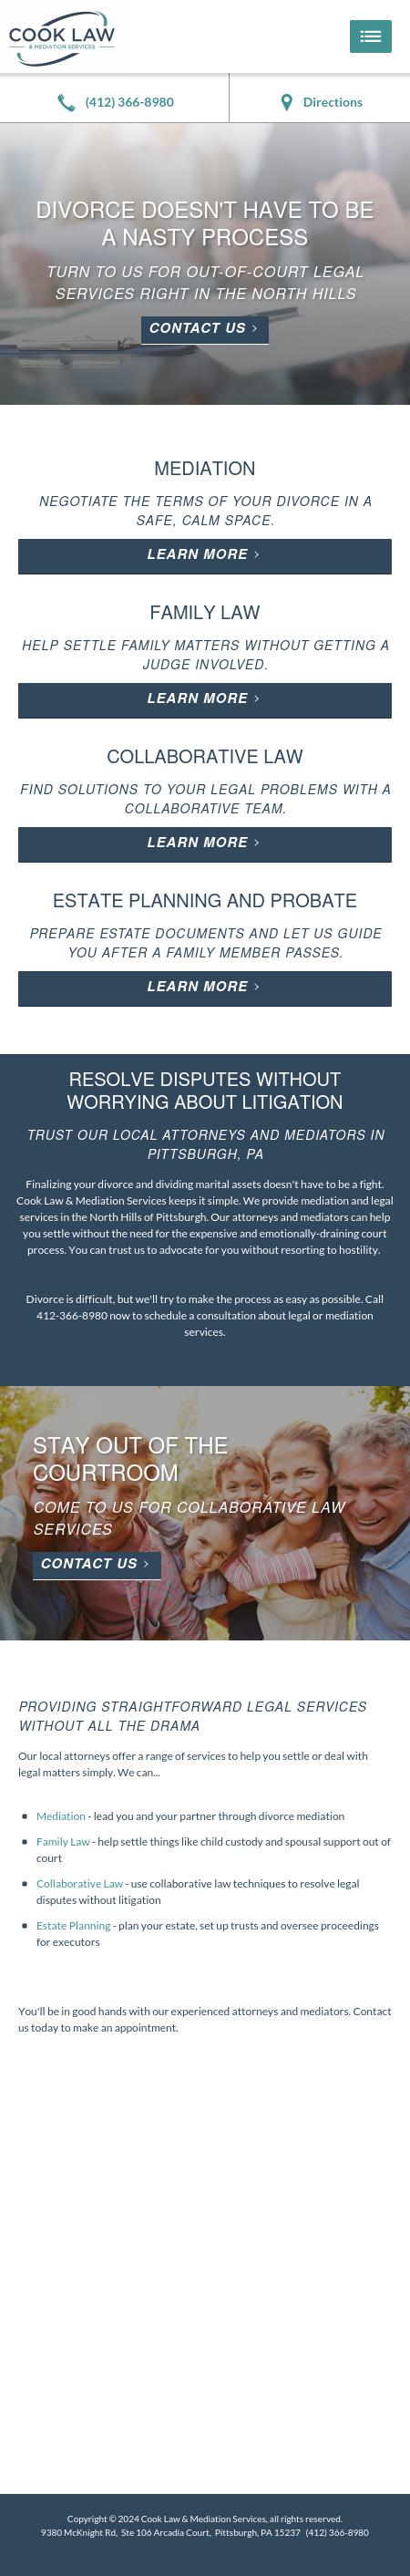 John R Cook, Esq. - Pittsburgh PA Lawyers